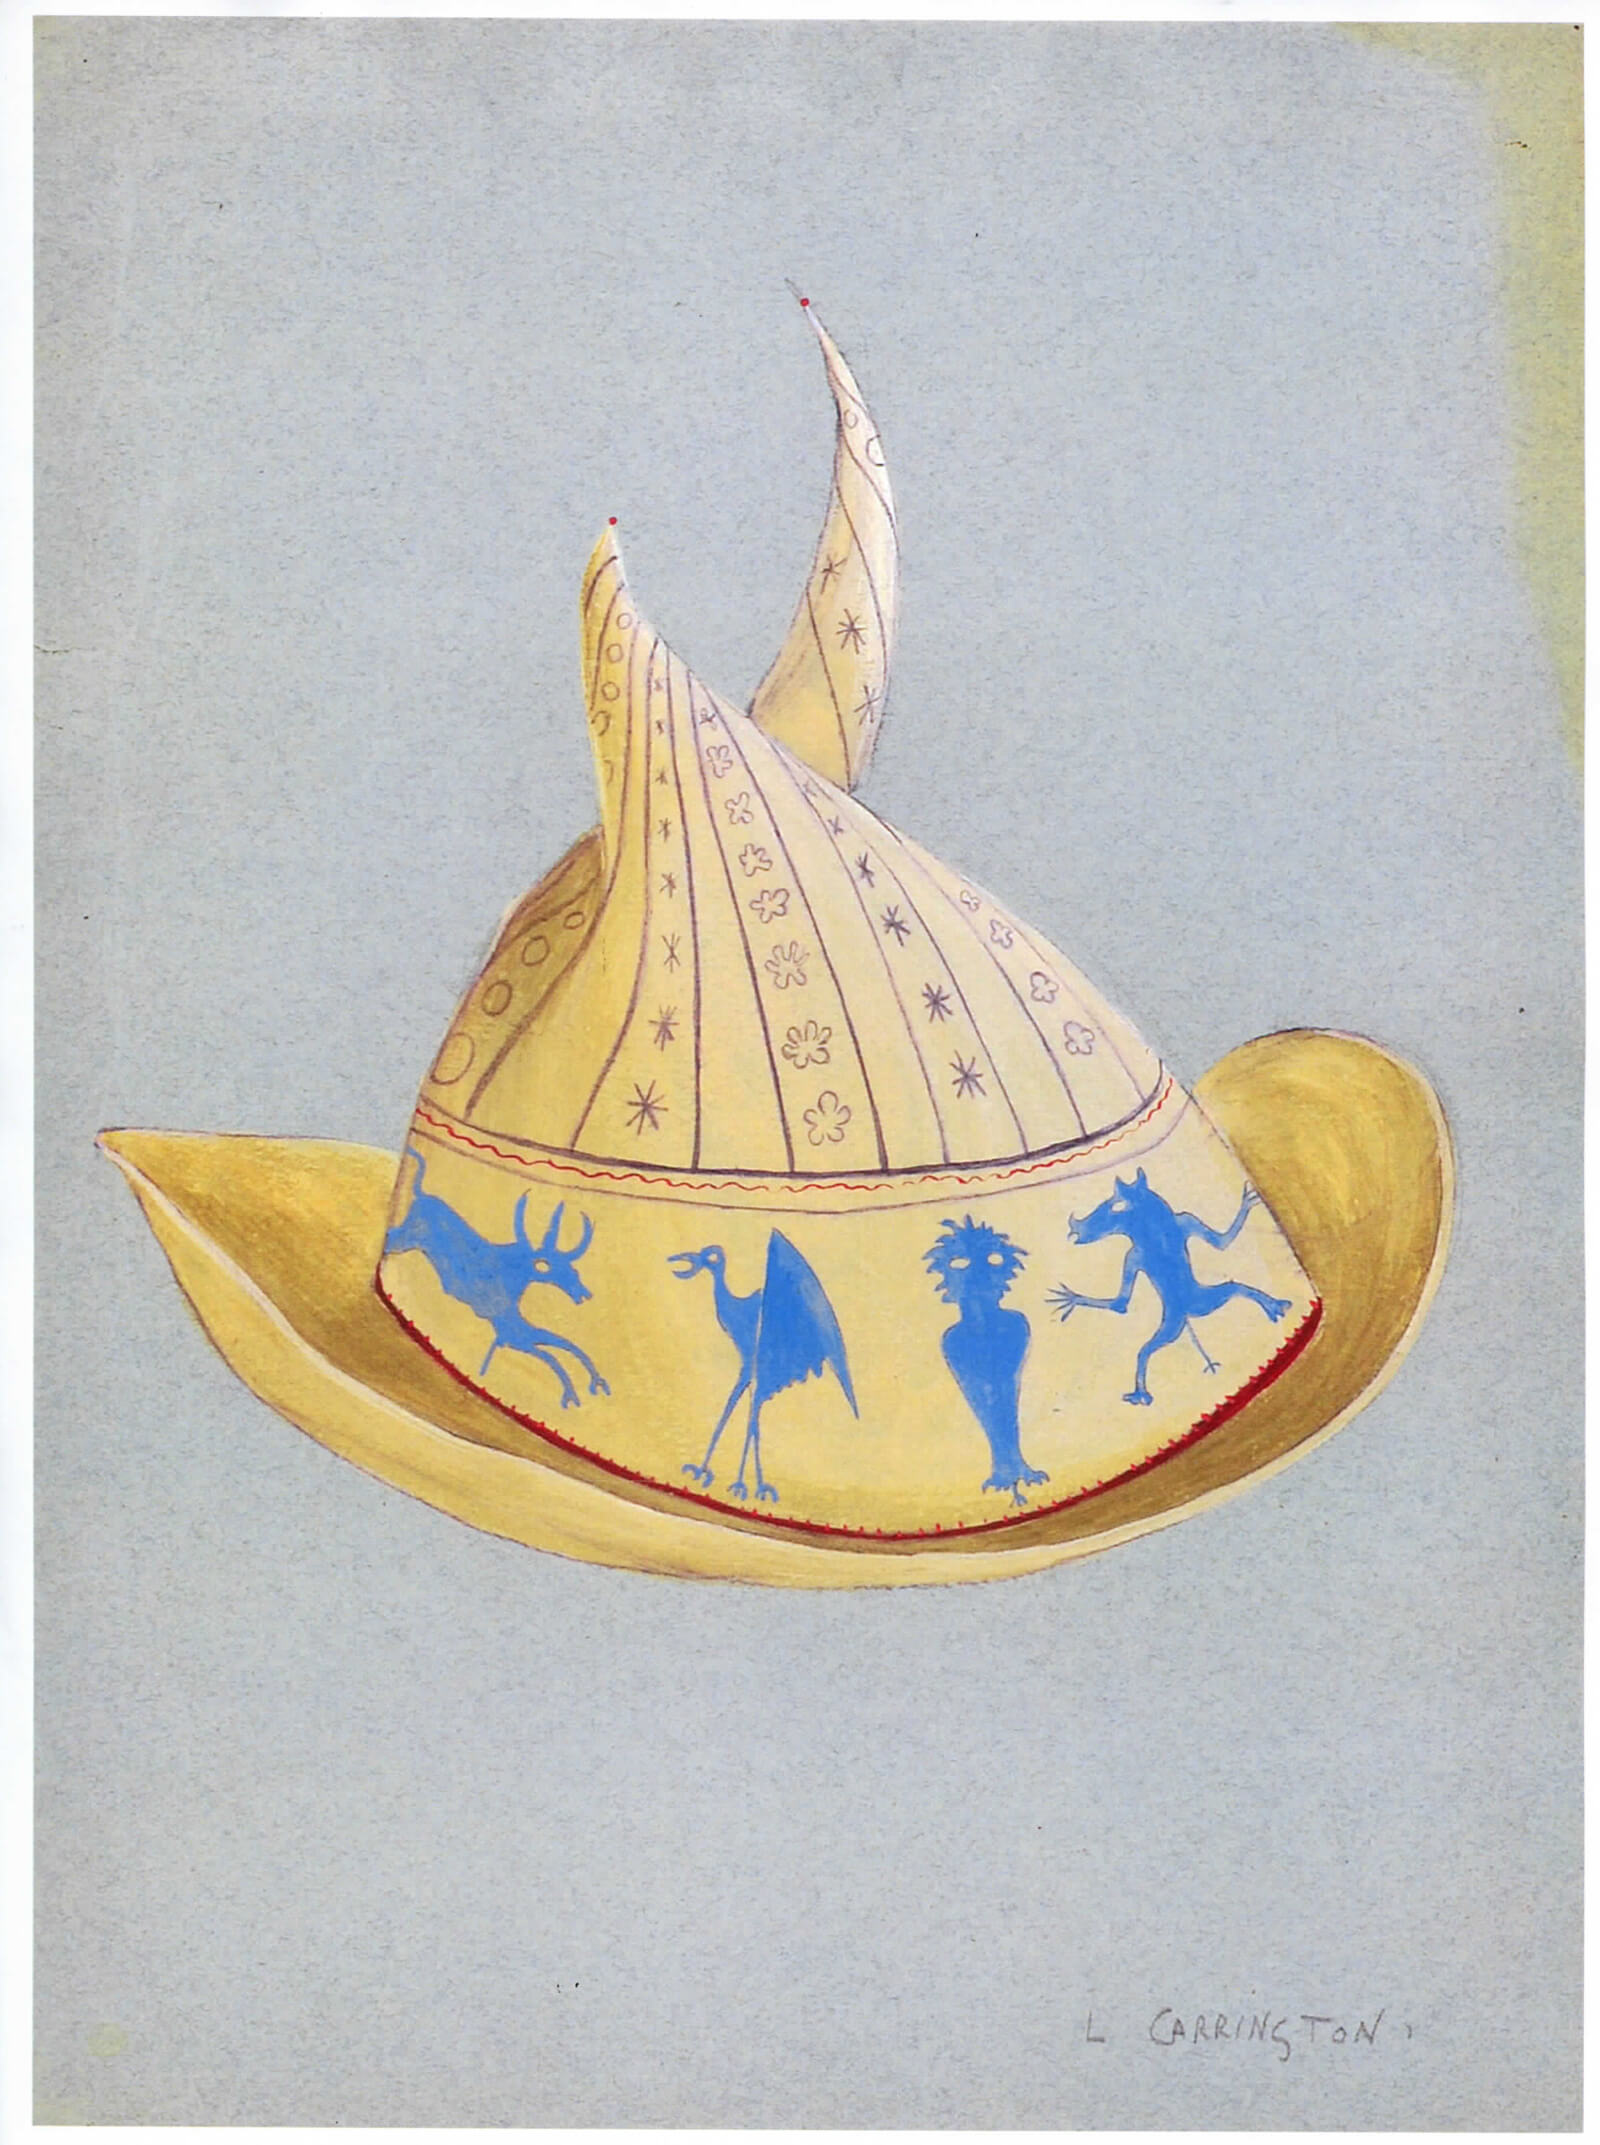 Chapeau casque antique , c. 1955,  Leonora Carrington | |Surrealism and Witchcraft | Lamb Gallery| STIRworld